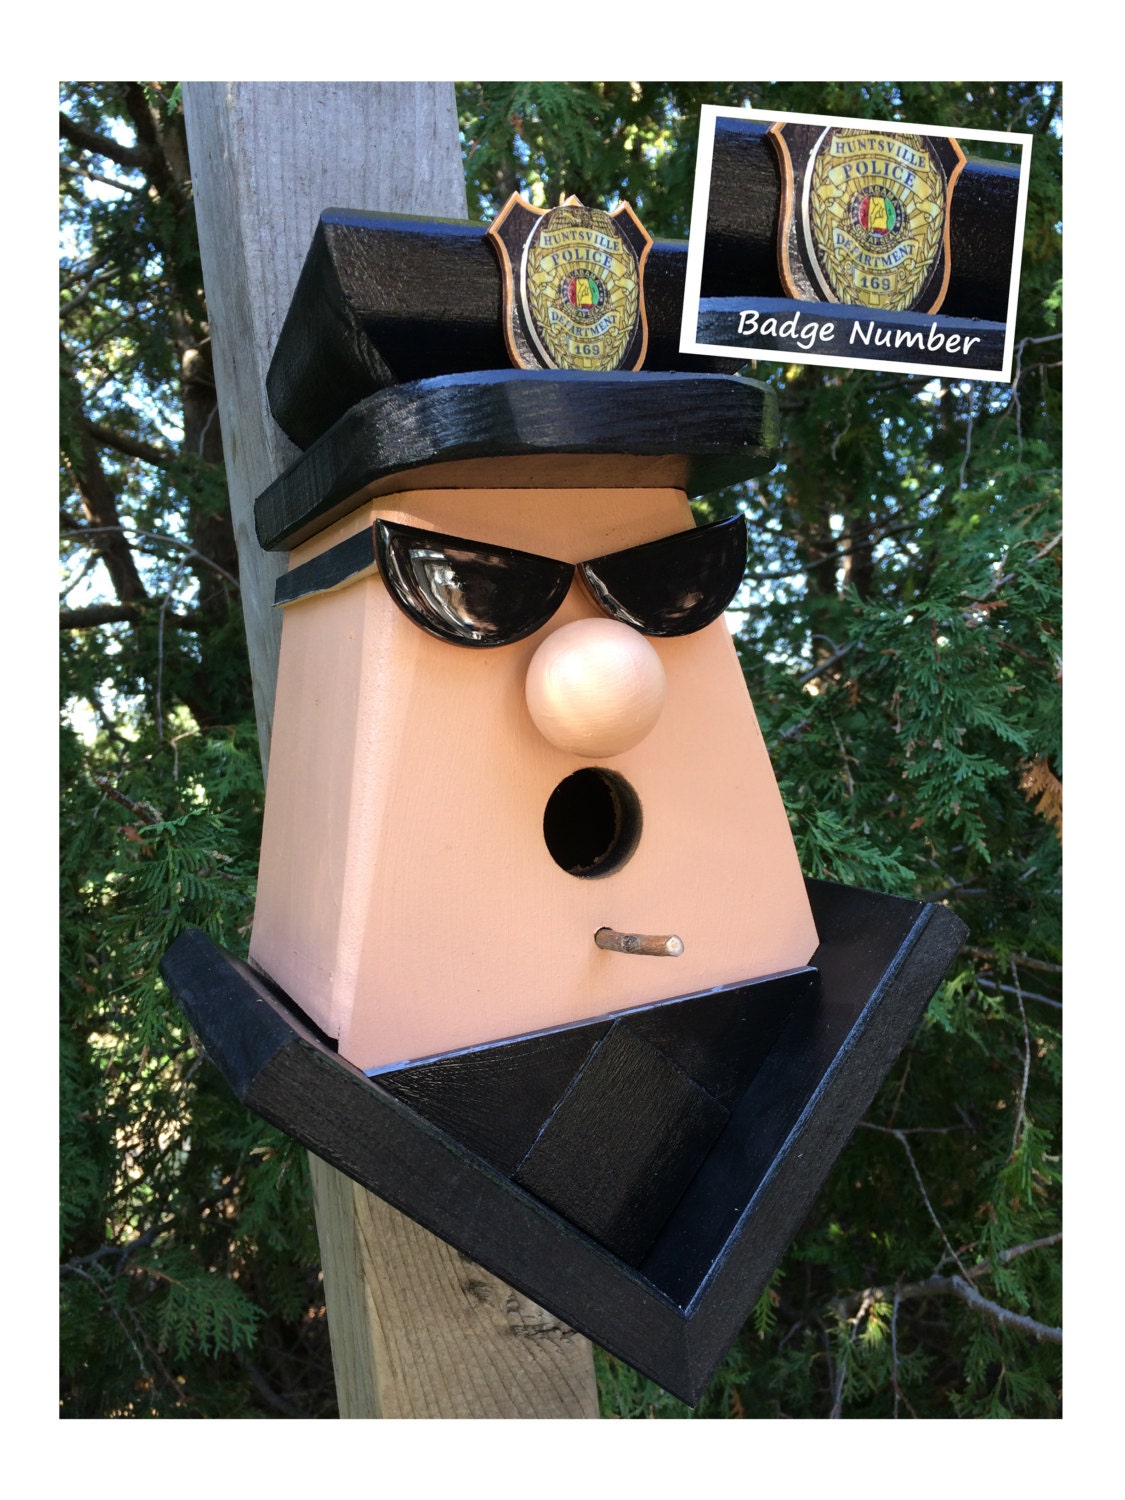 Huntsville Police Department. "Custom Badge Number" Birdhouse